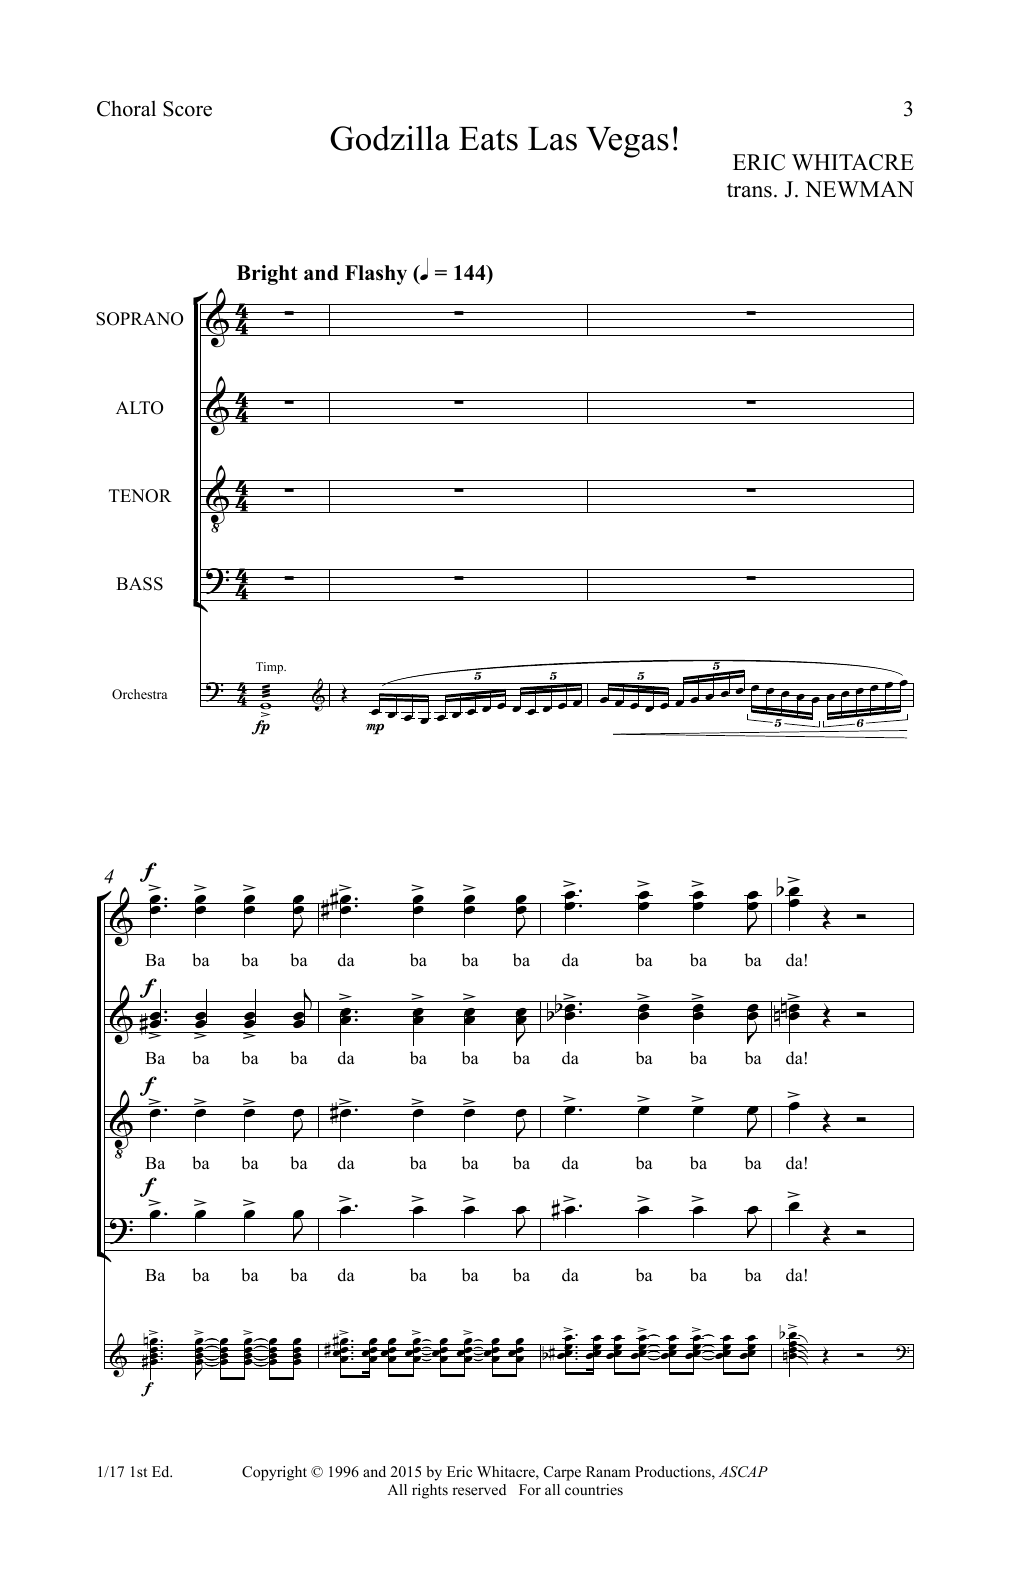 Eric Whitacre Godzilla Eats Las Vegas! Sheet Music Notes & Chords for SATB Choir - Download or Print PDF